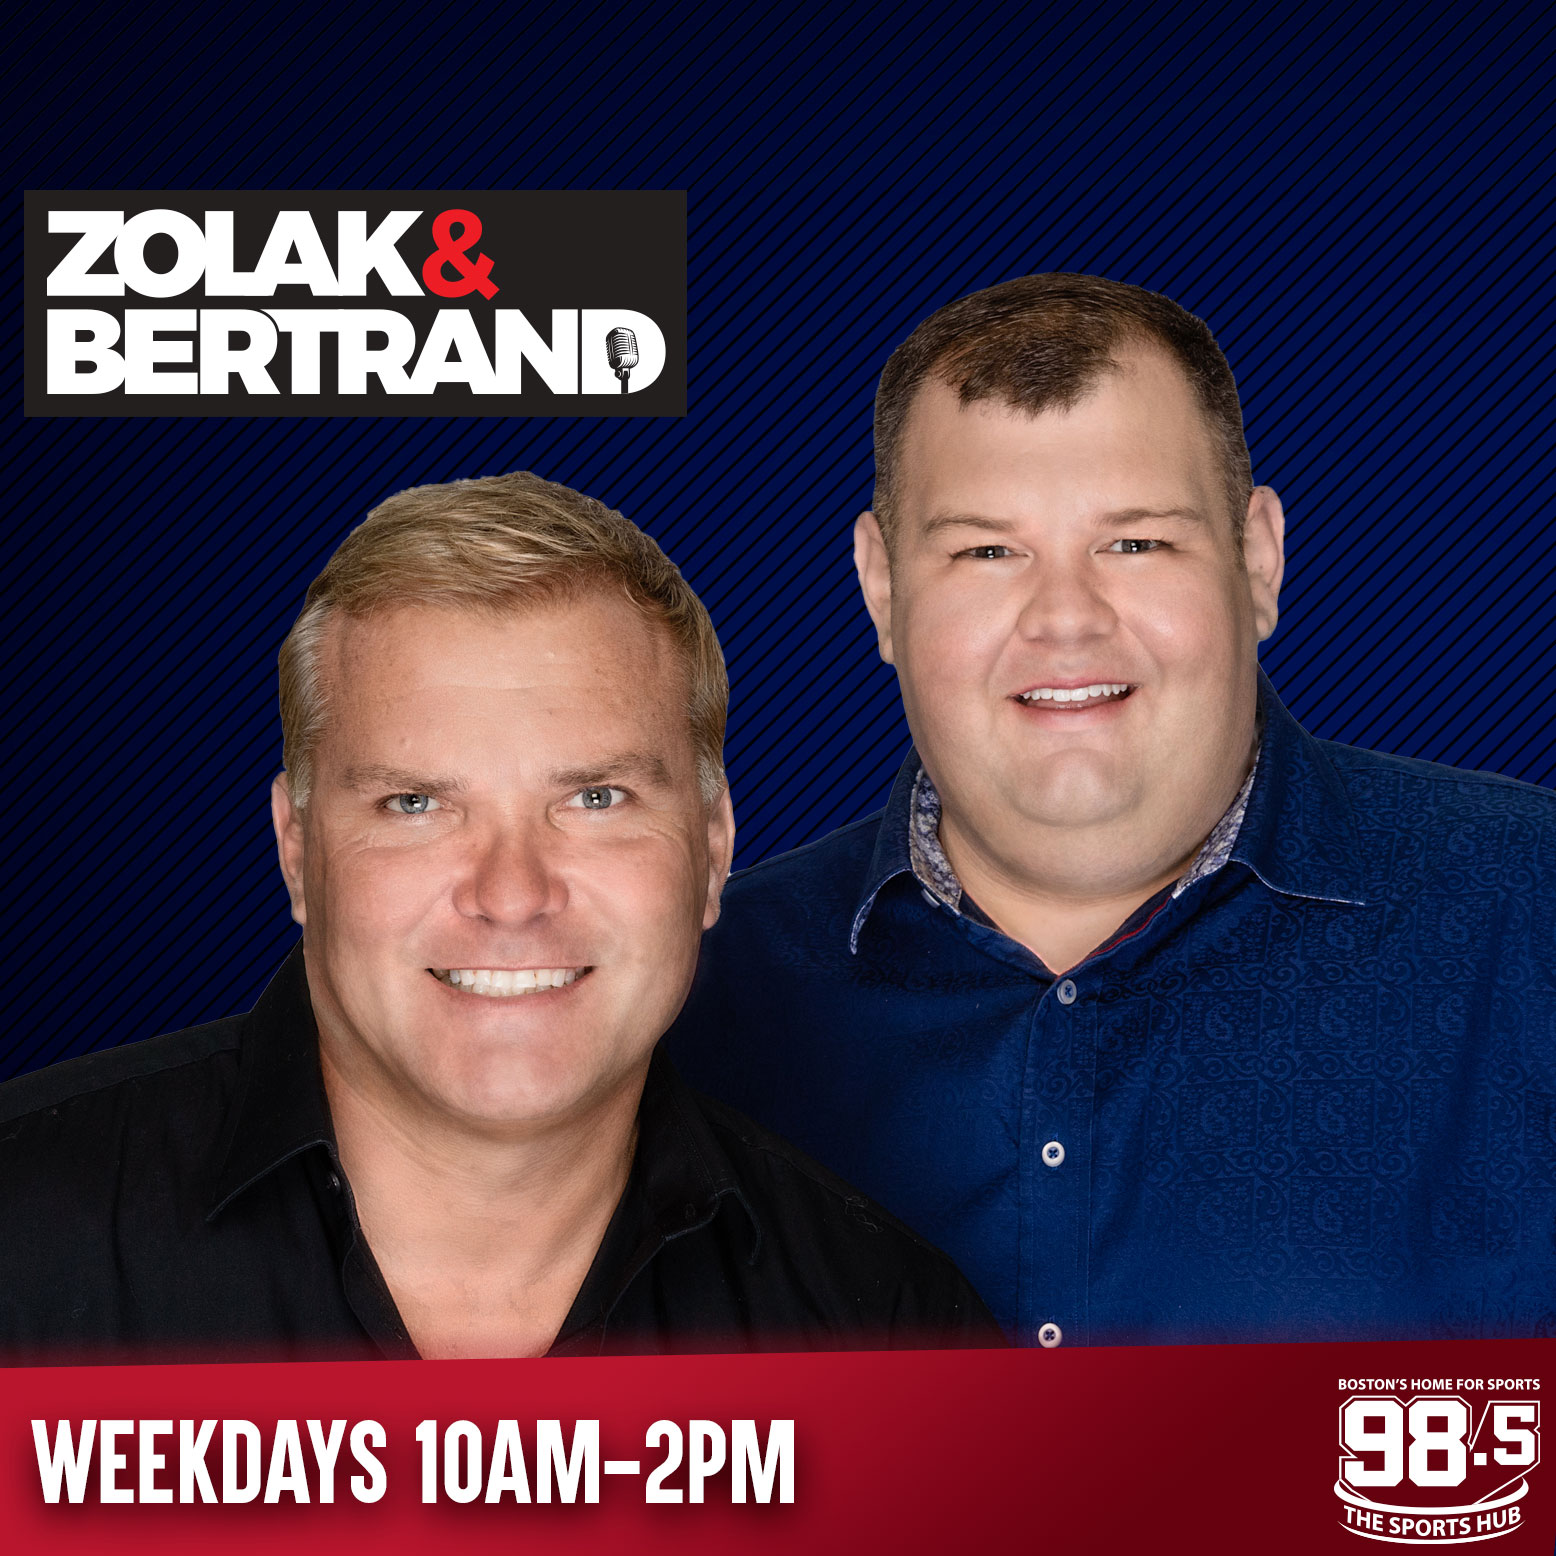 Zolak & Bertrand: Bruins take down Leafs in Game 7